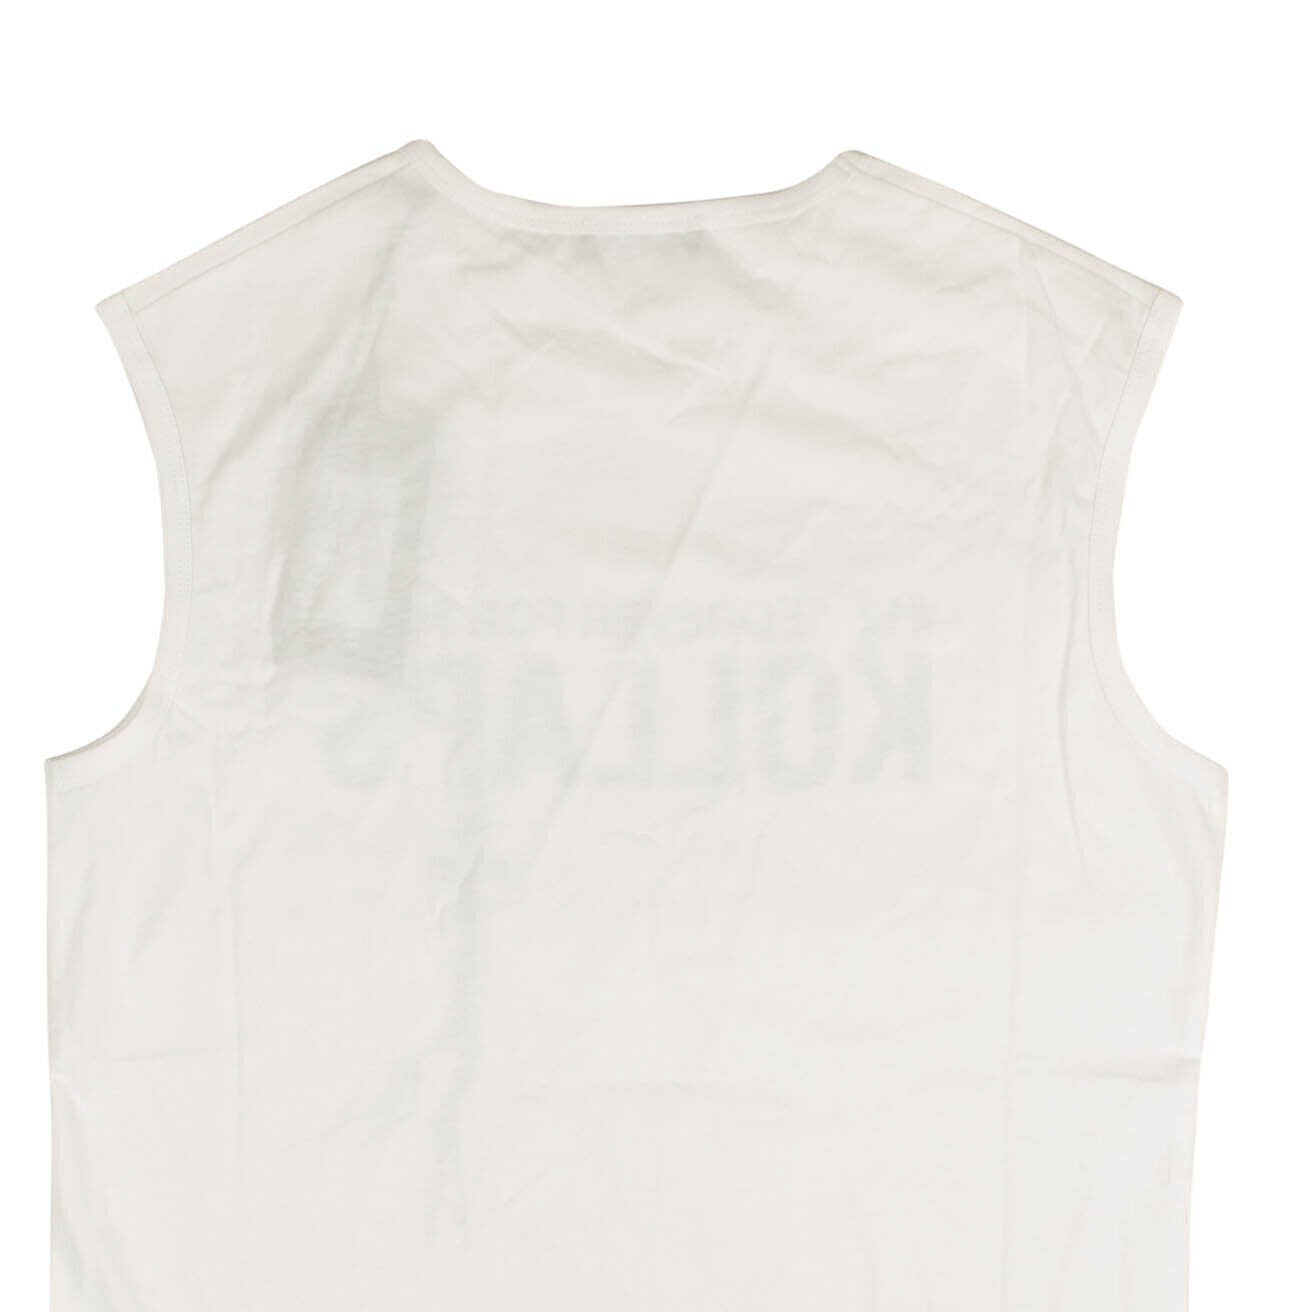 Raf Simons Sleeveless Slim Fit Kollaps Print Tank Top - White